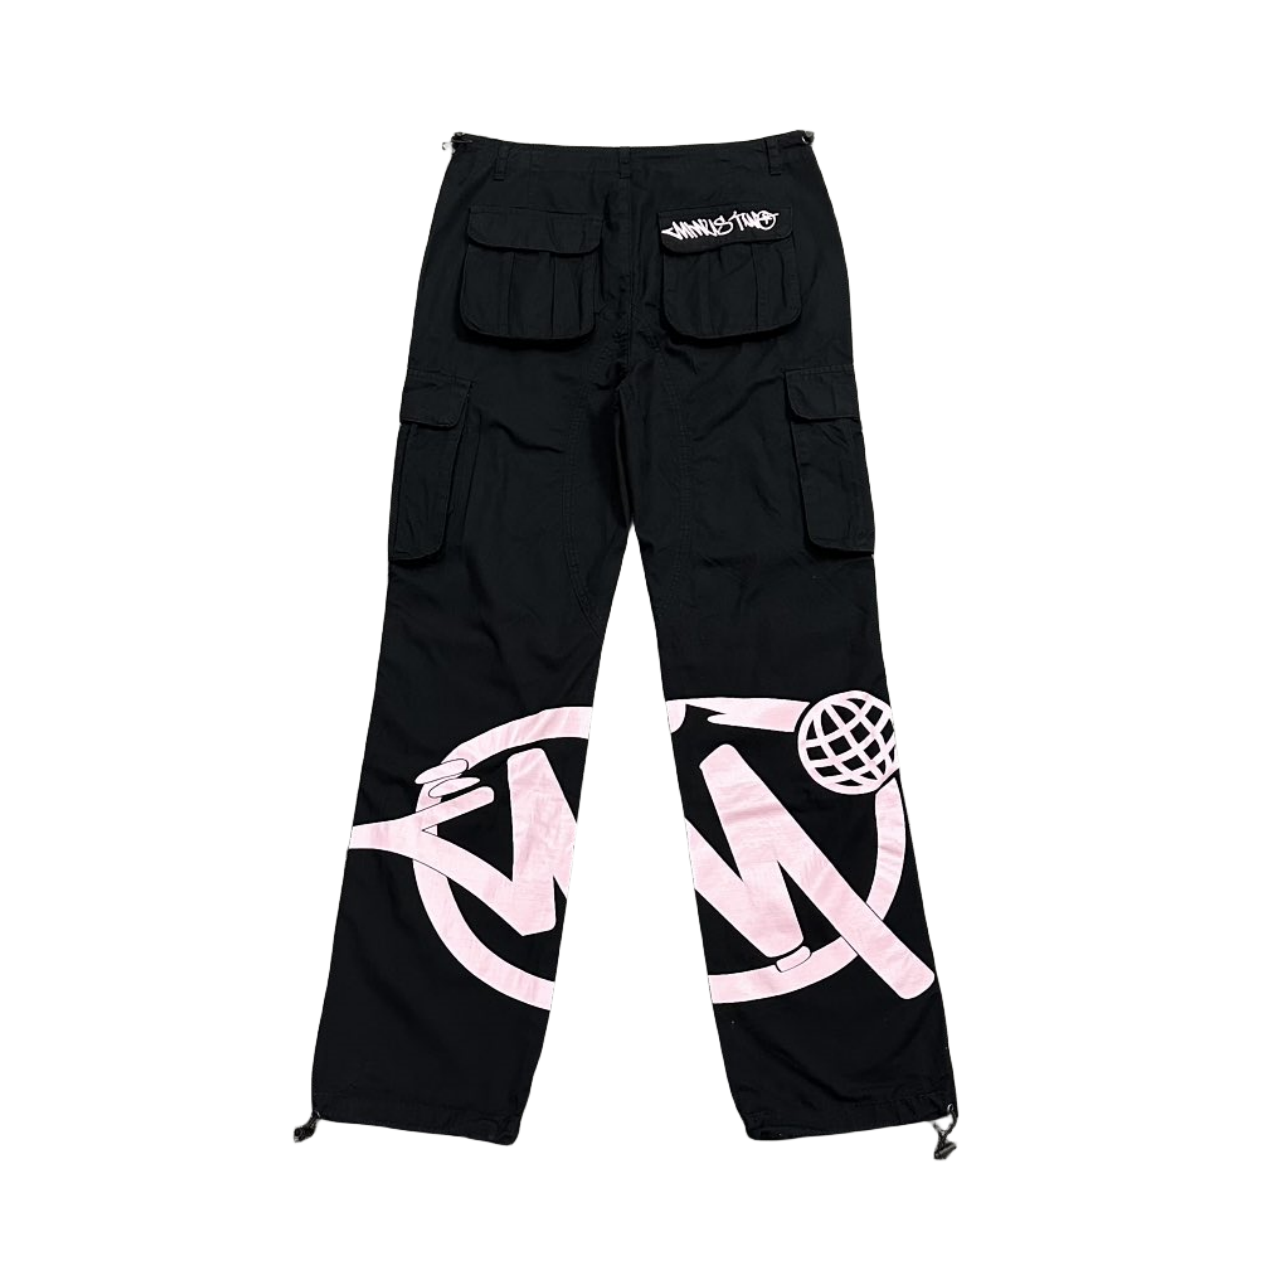 Minus Two Cargo Pants Y2K Streetwear Overalls Jeans Long Joggers Women's Men's Trousers - Black/Pink